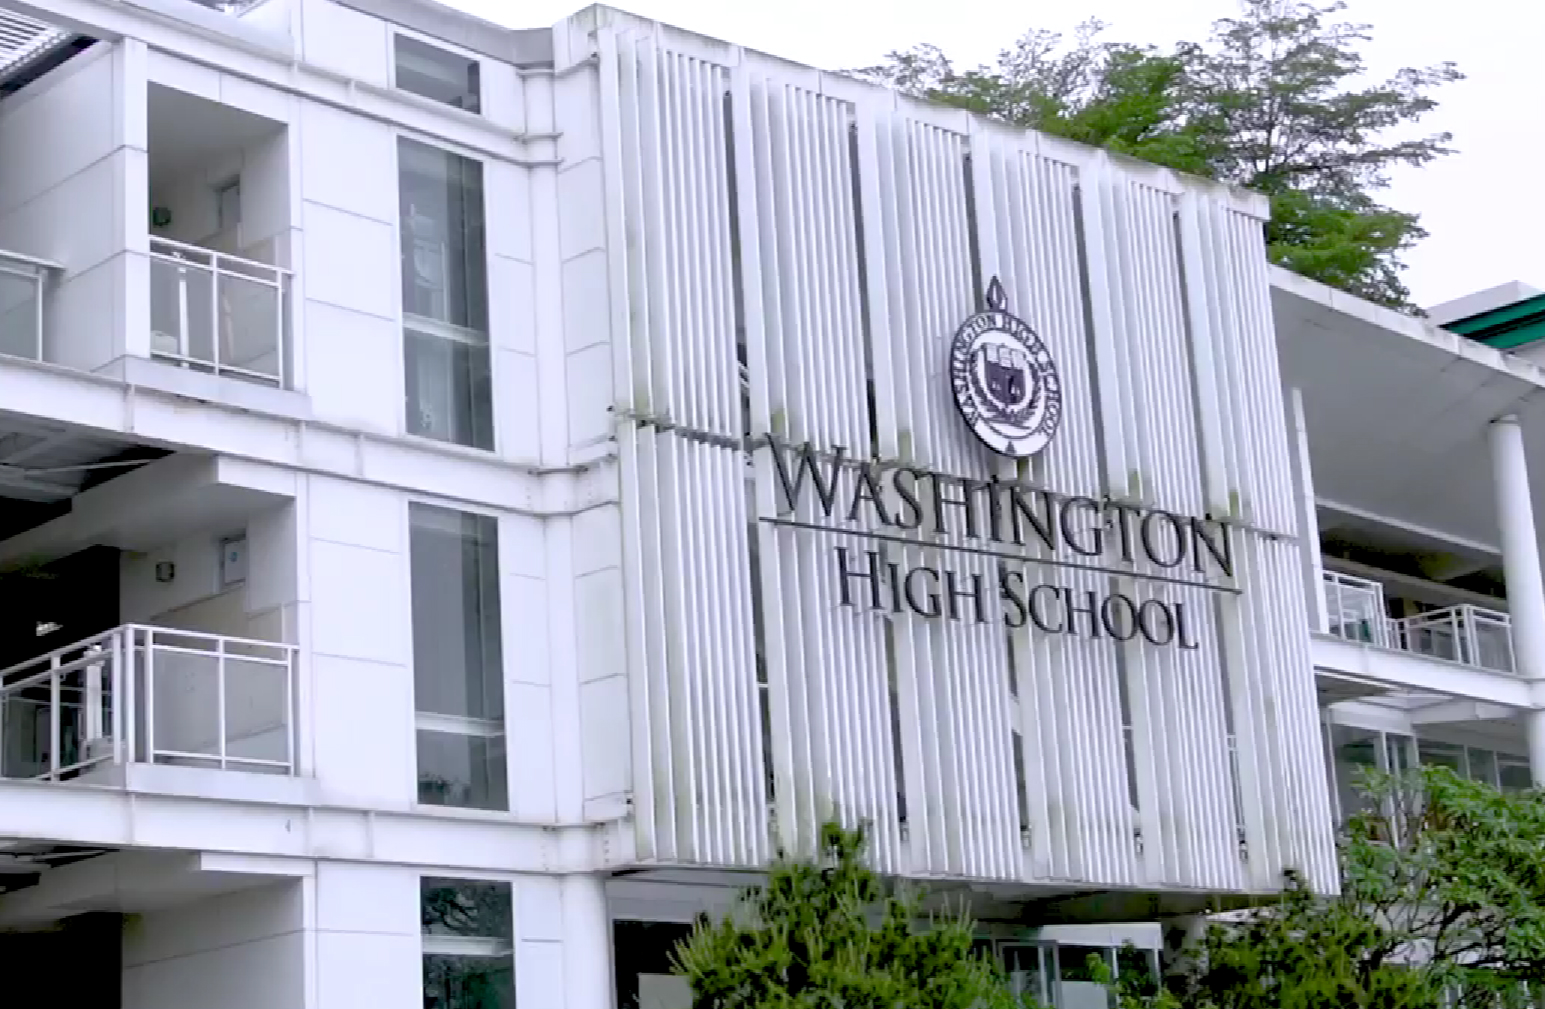 Washington International School in Taichung